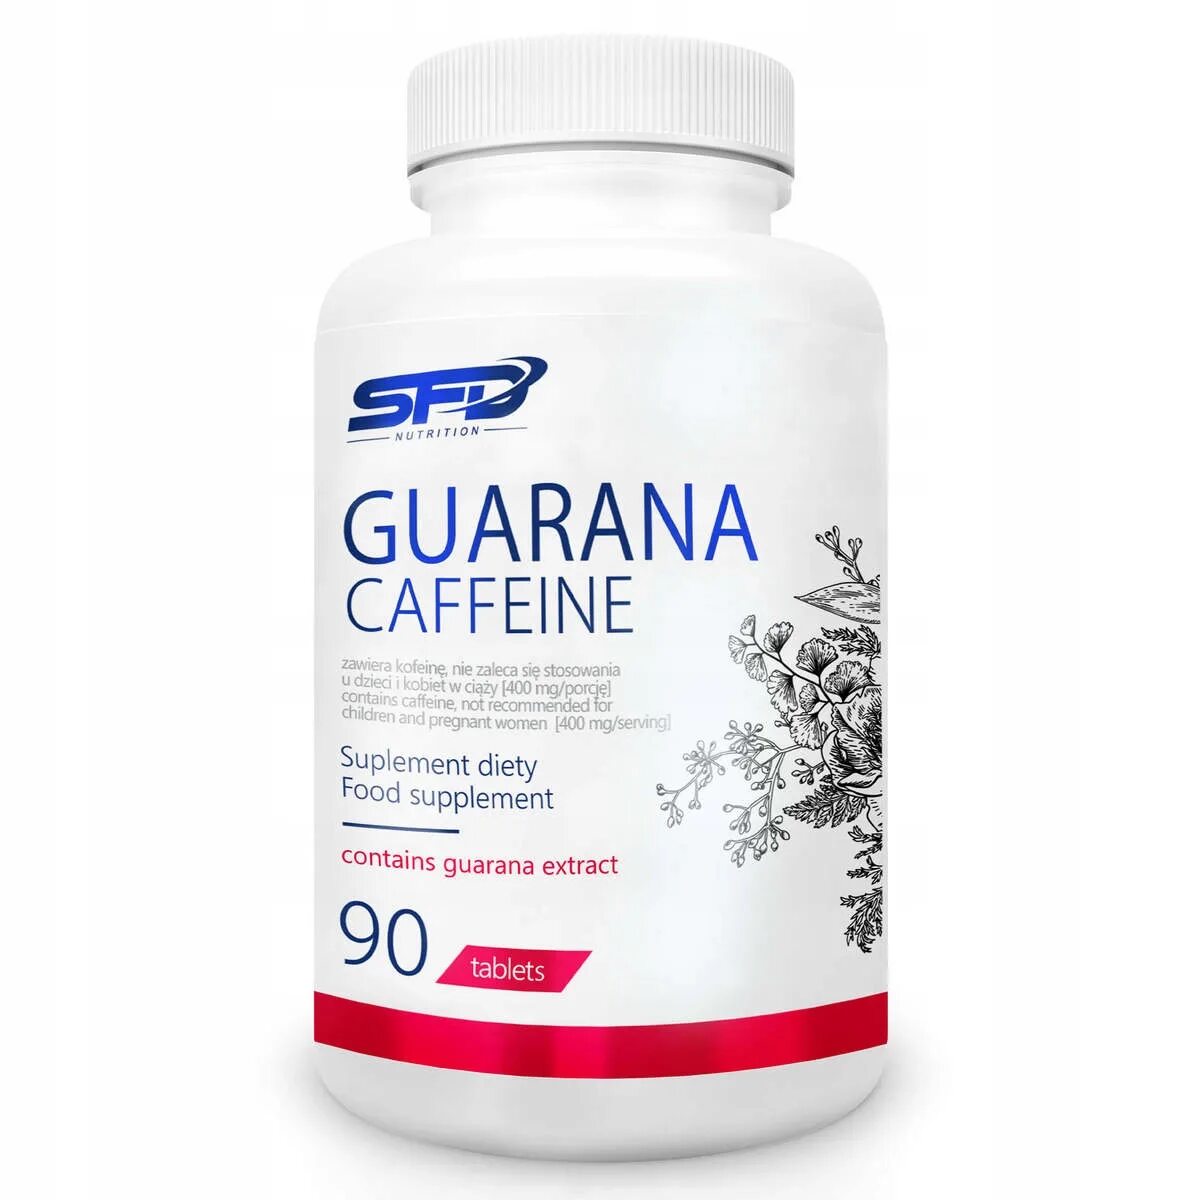 Гуарана 2sn Guarana 90 капсул. Гуарана кофеин энергетики. Кофеин и экстракт гуараны. Энергетик 400mg кофеина. Кофеин комплекс